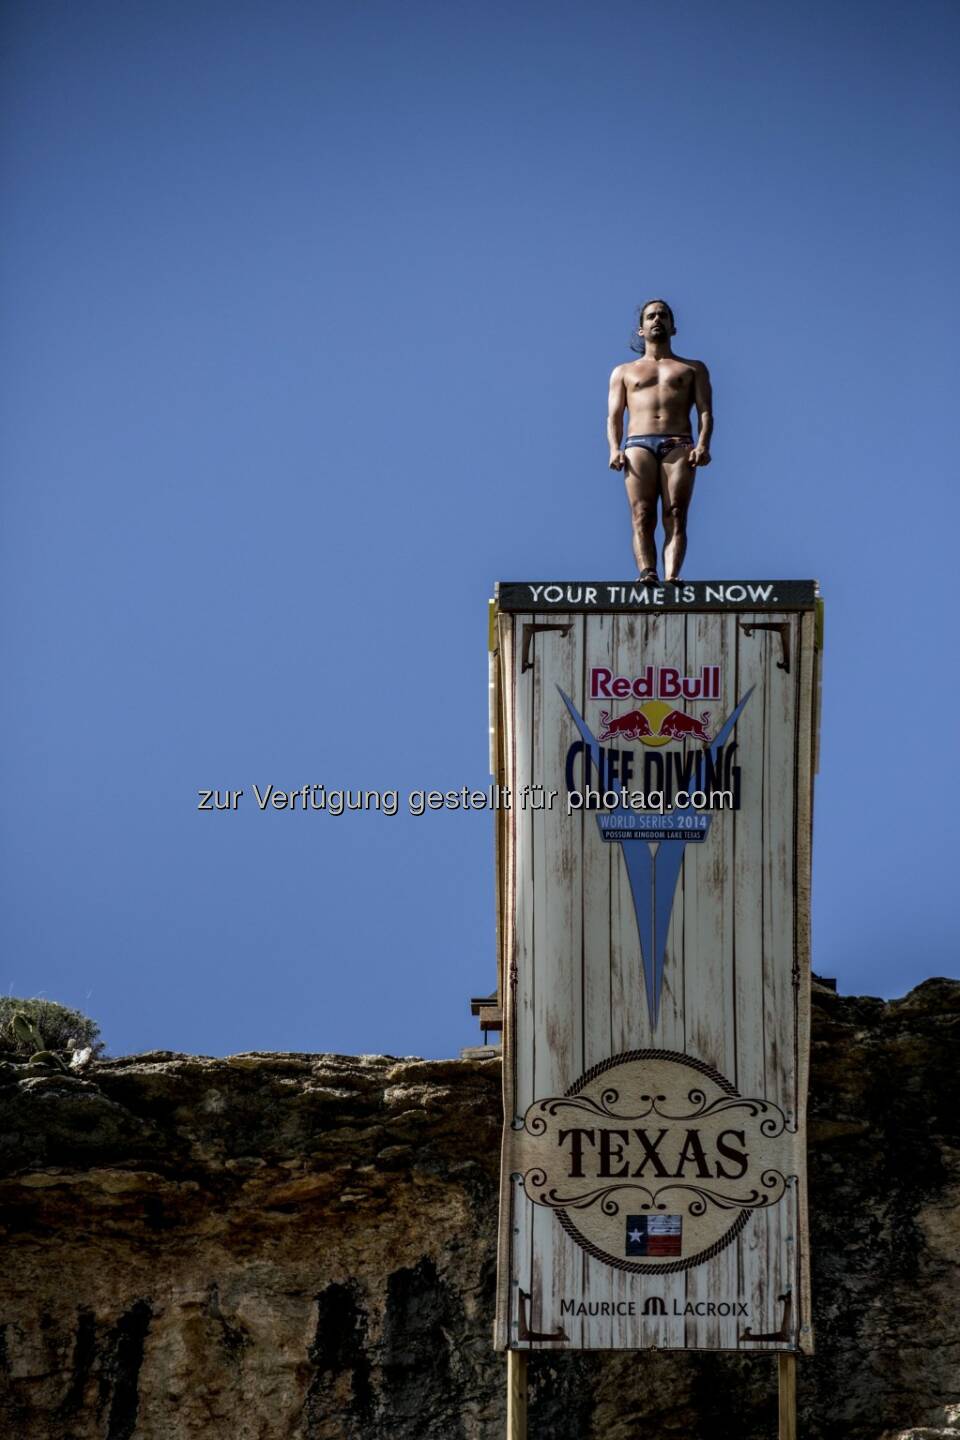 Orlando Duque, Red Bull Cliff Diving Texas